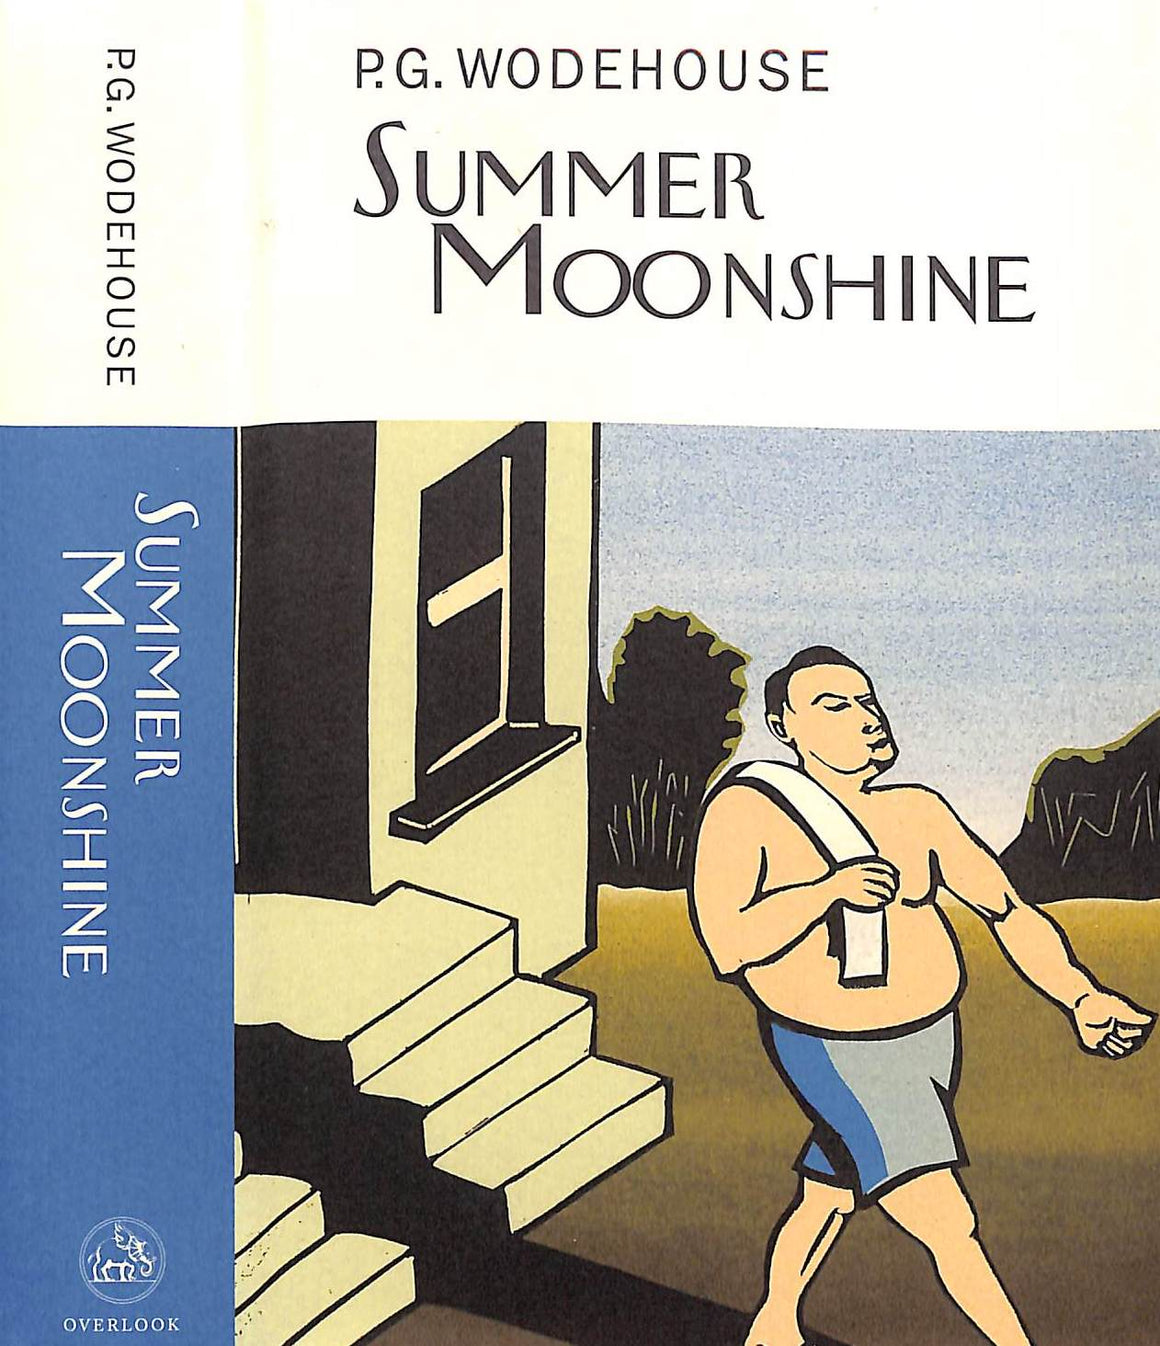 "Summer Moonshine" 2003 WODEHOUSE, P.G. (SOLD)